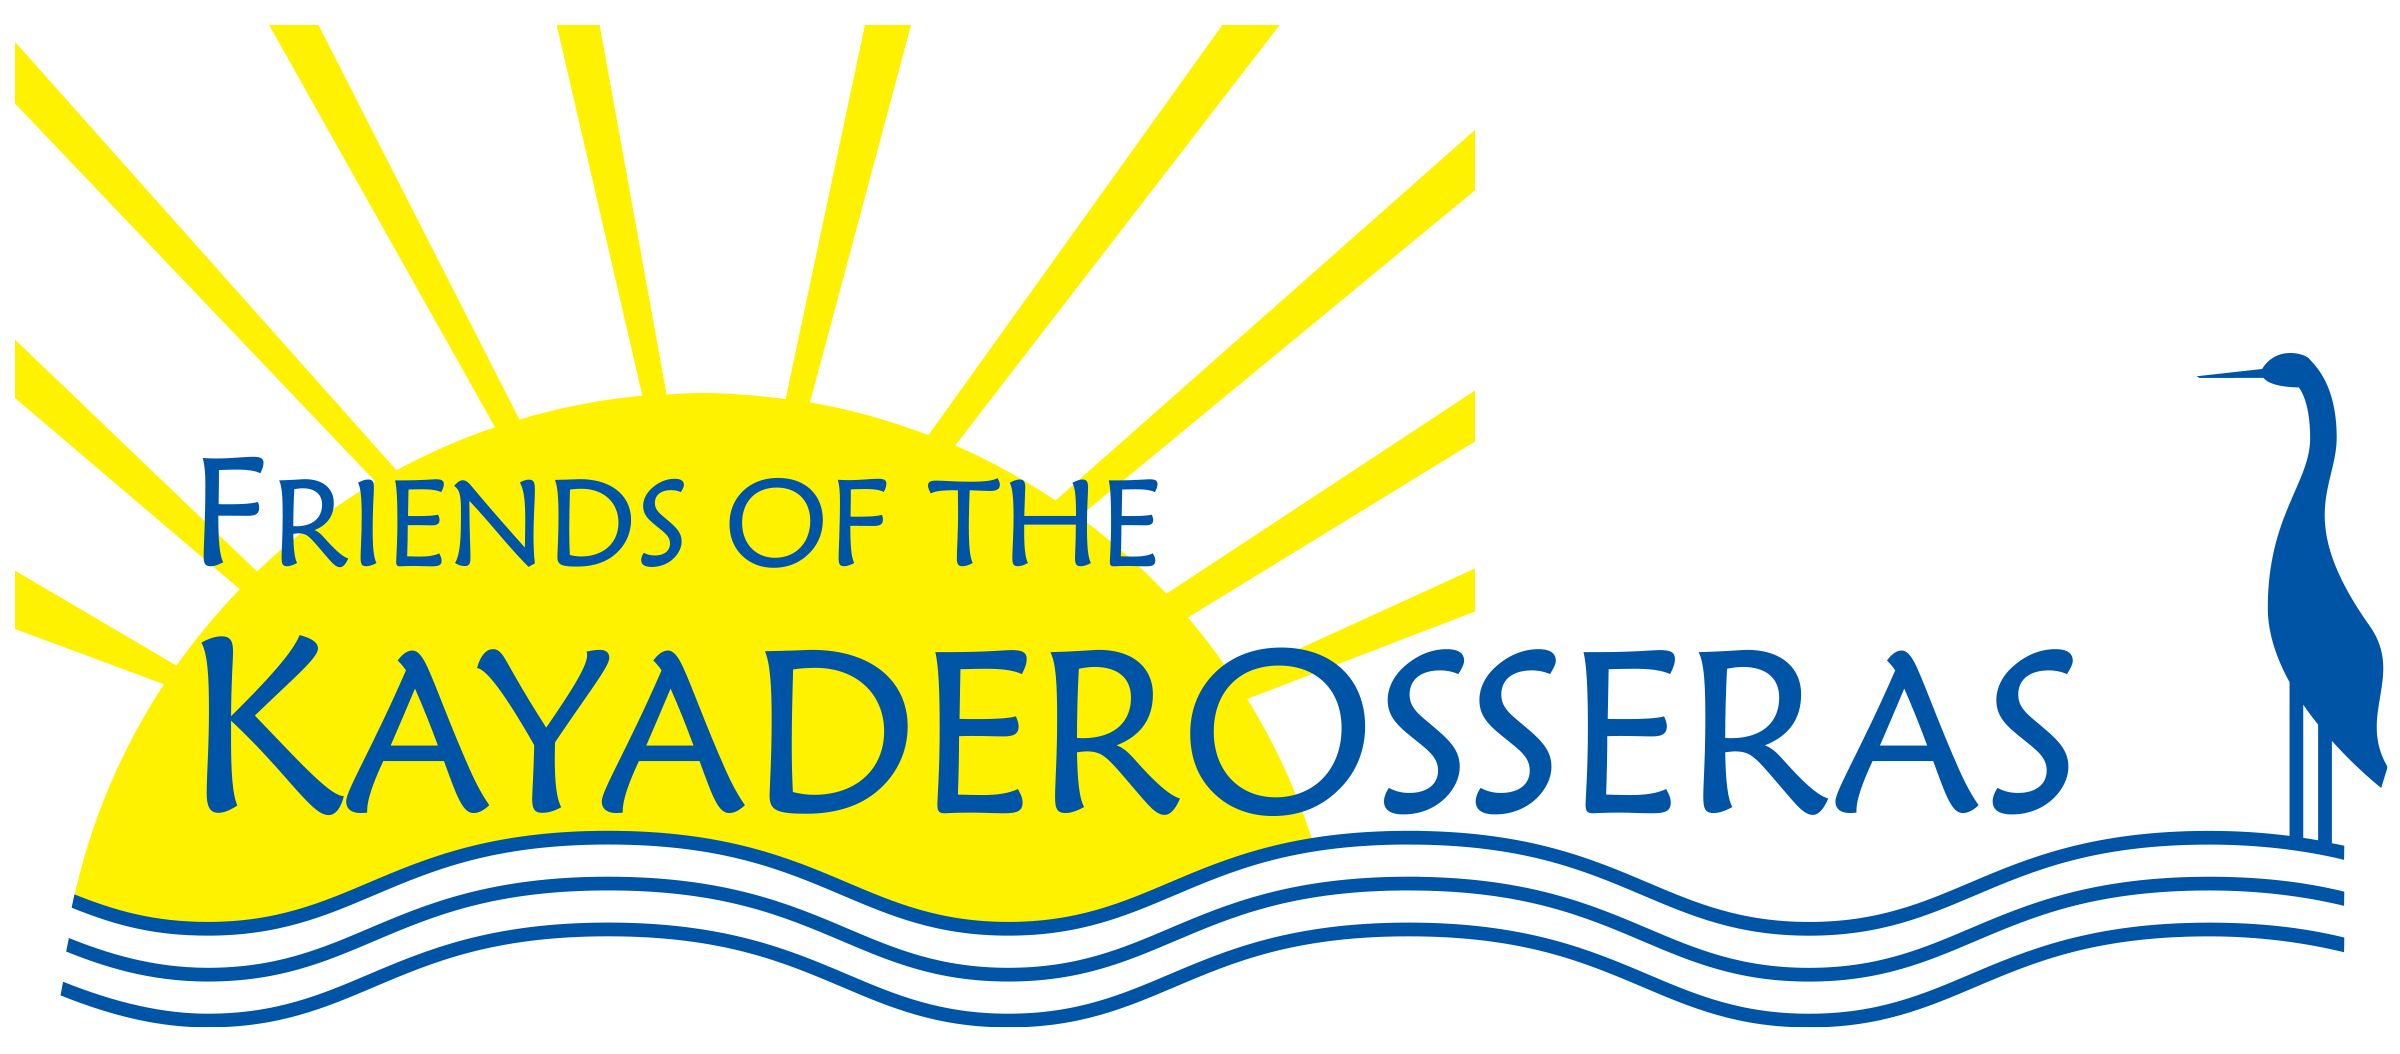 Friends of the Kayaderosseras logo